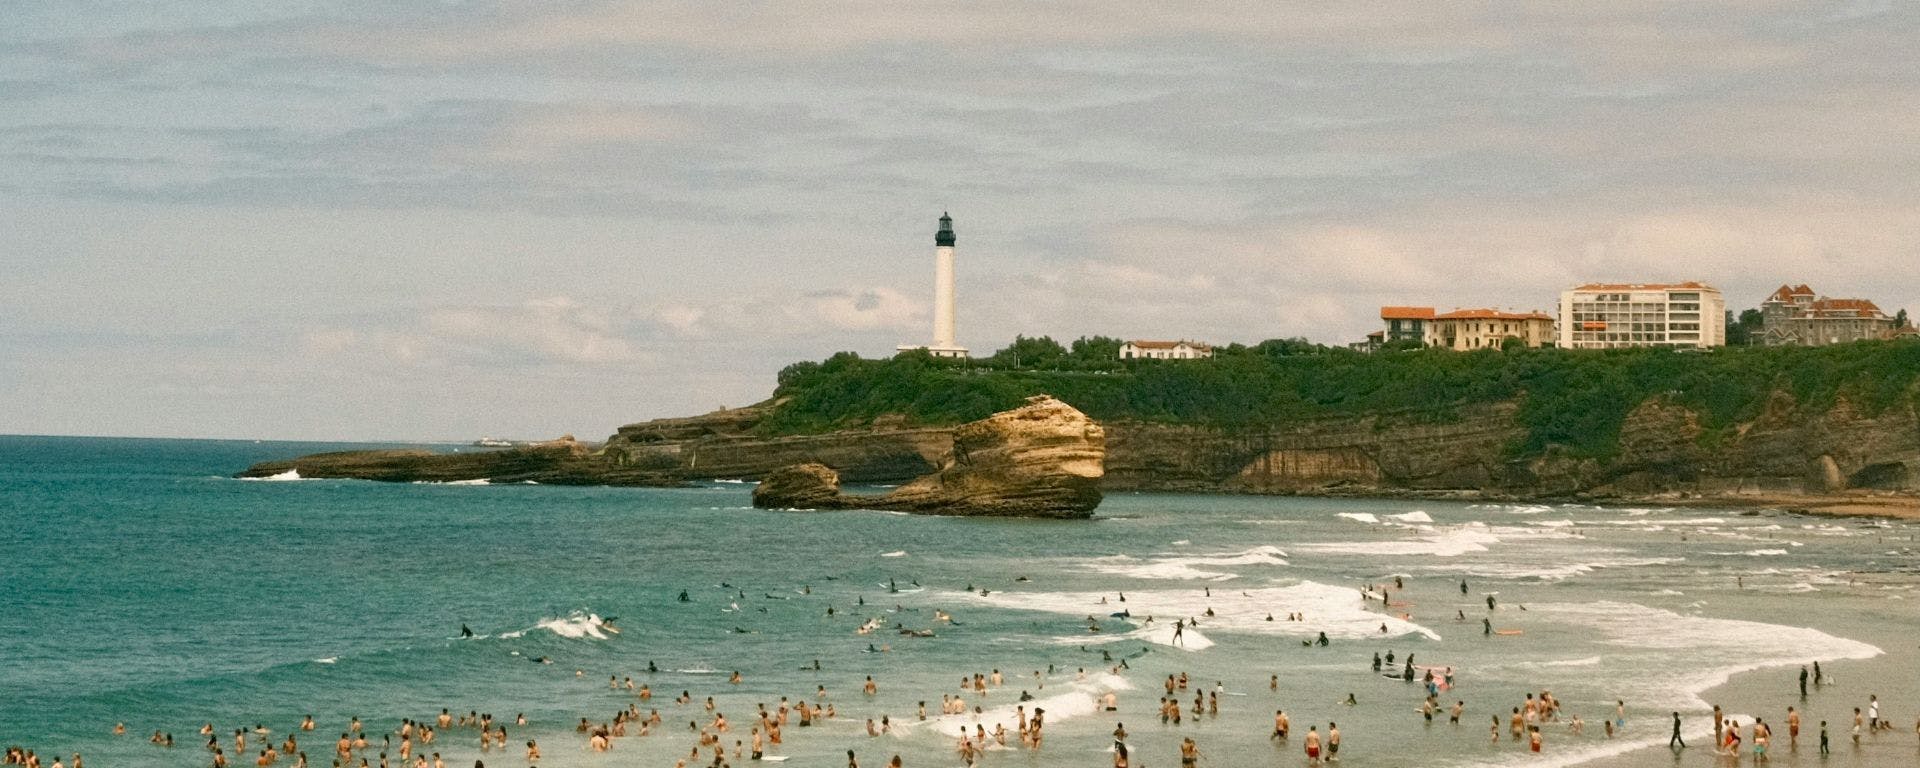 Biarritz (France) - Card Background Image